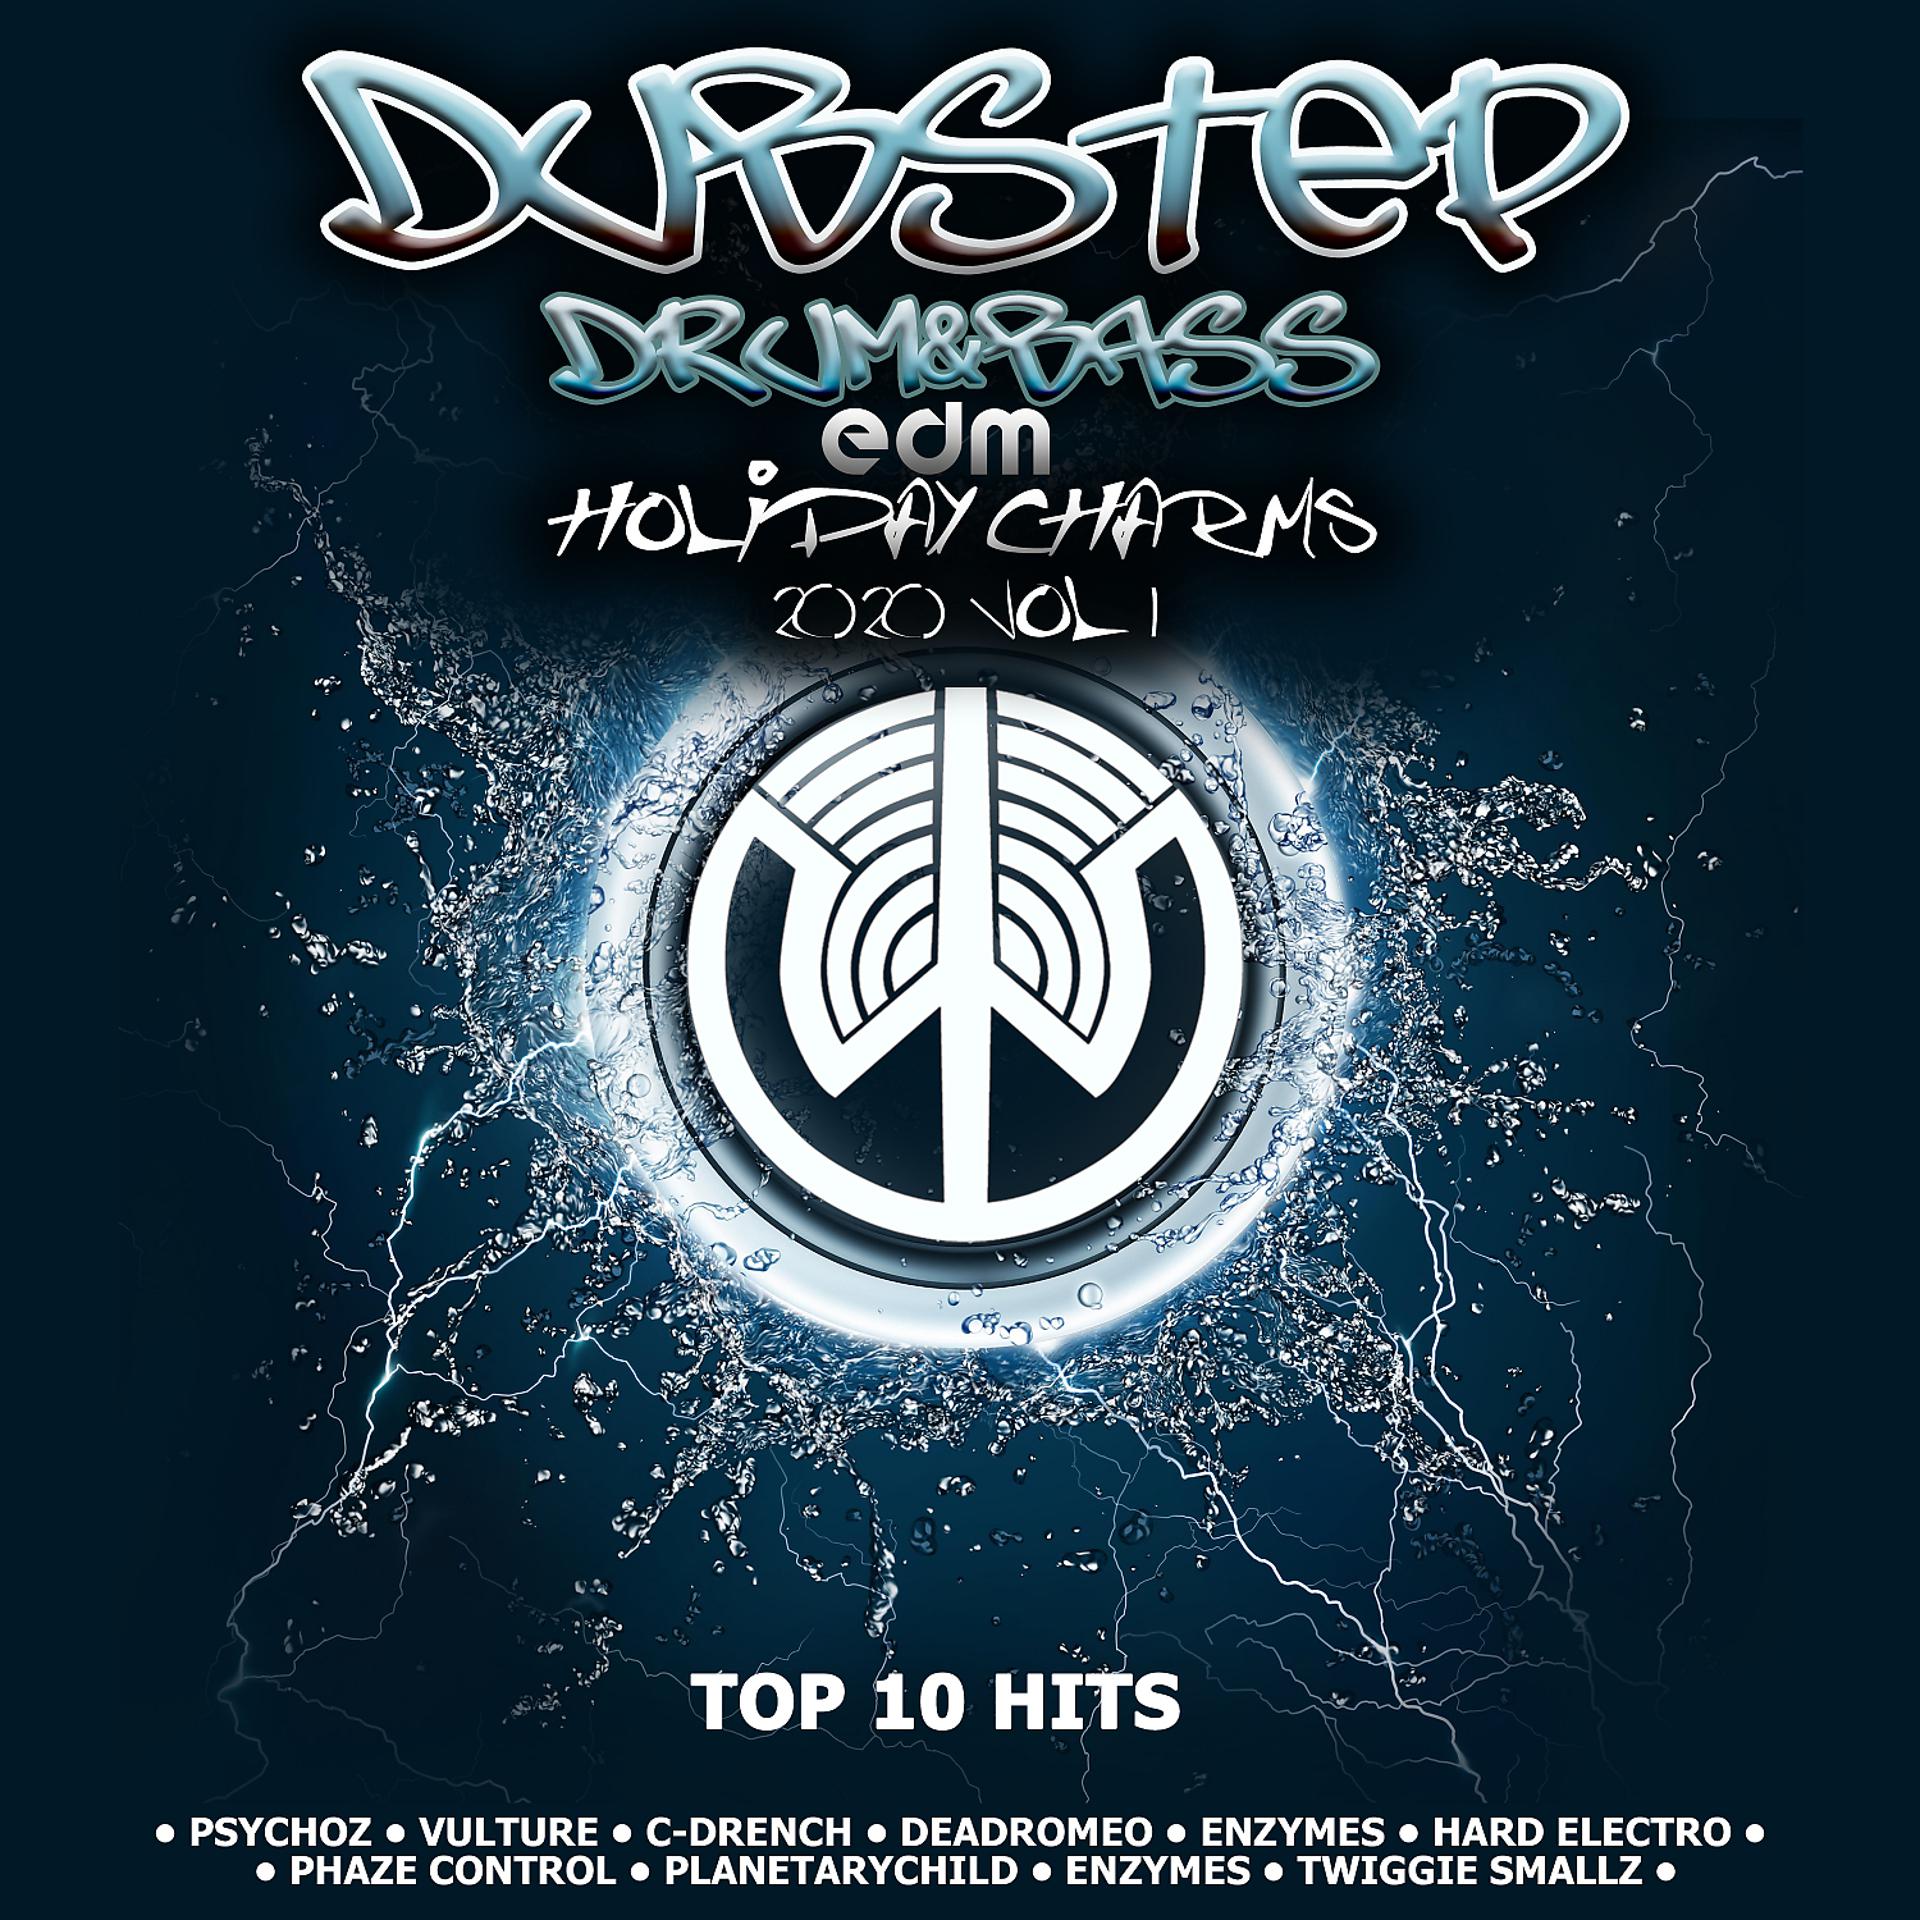 Постер альбома Dubstep Drum & Bass EDM Holiday Charms 2020 Top 10 Hits Wayside, Vol.1